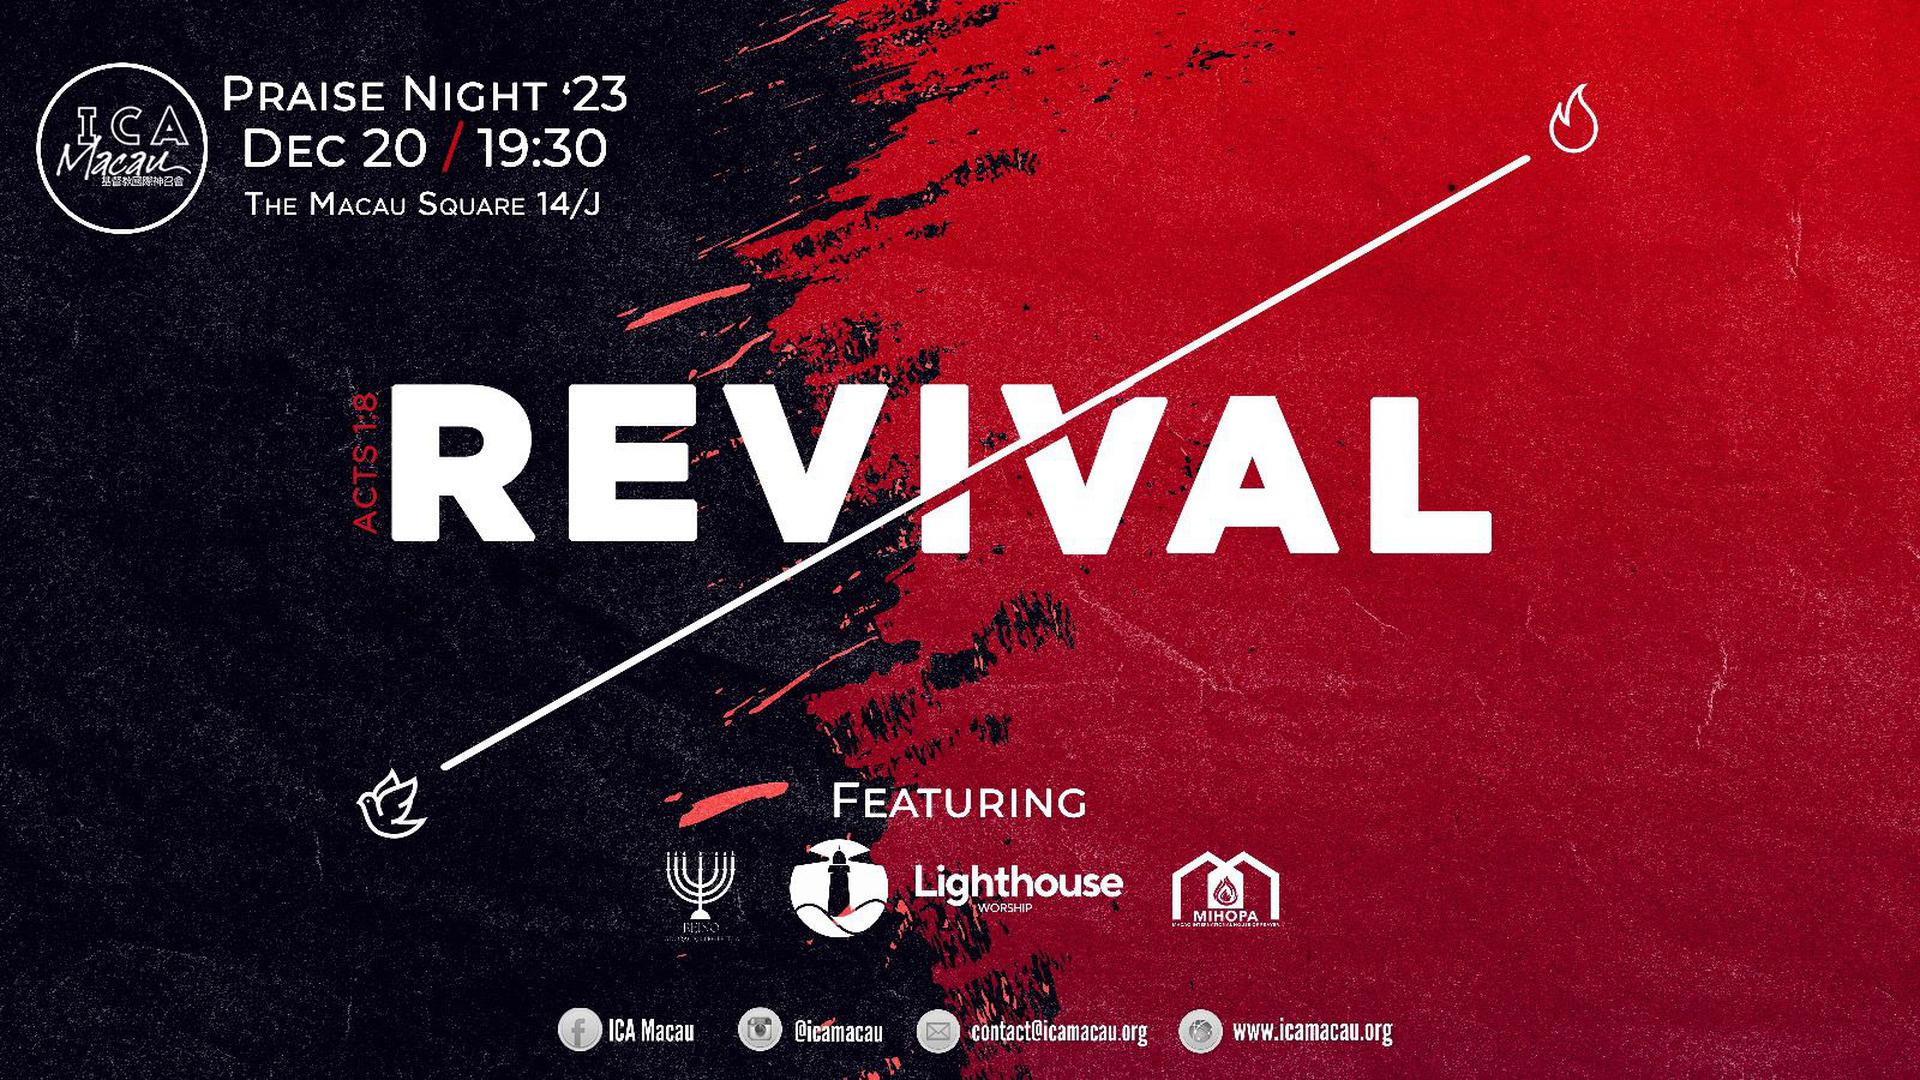 Praise Night - Revival